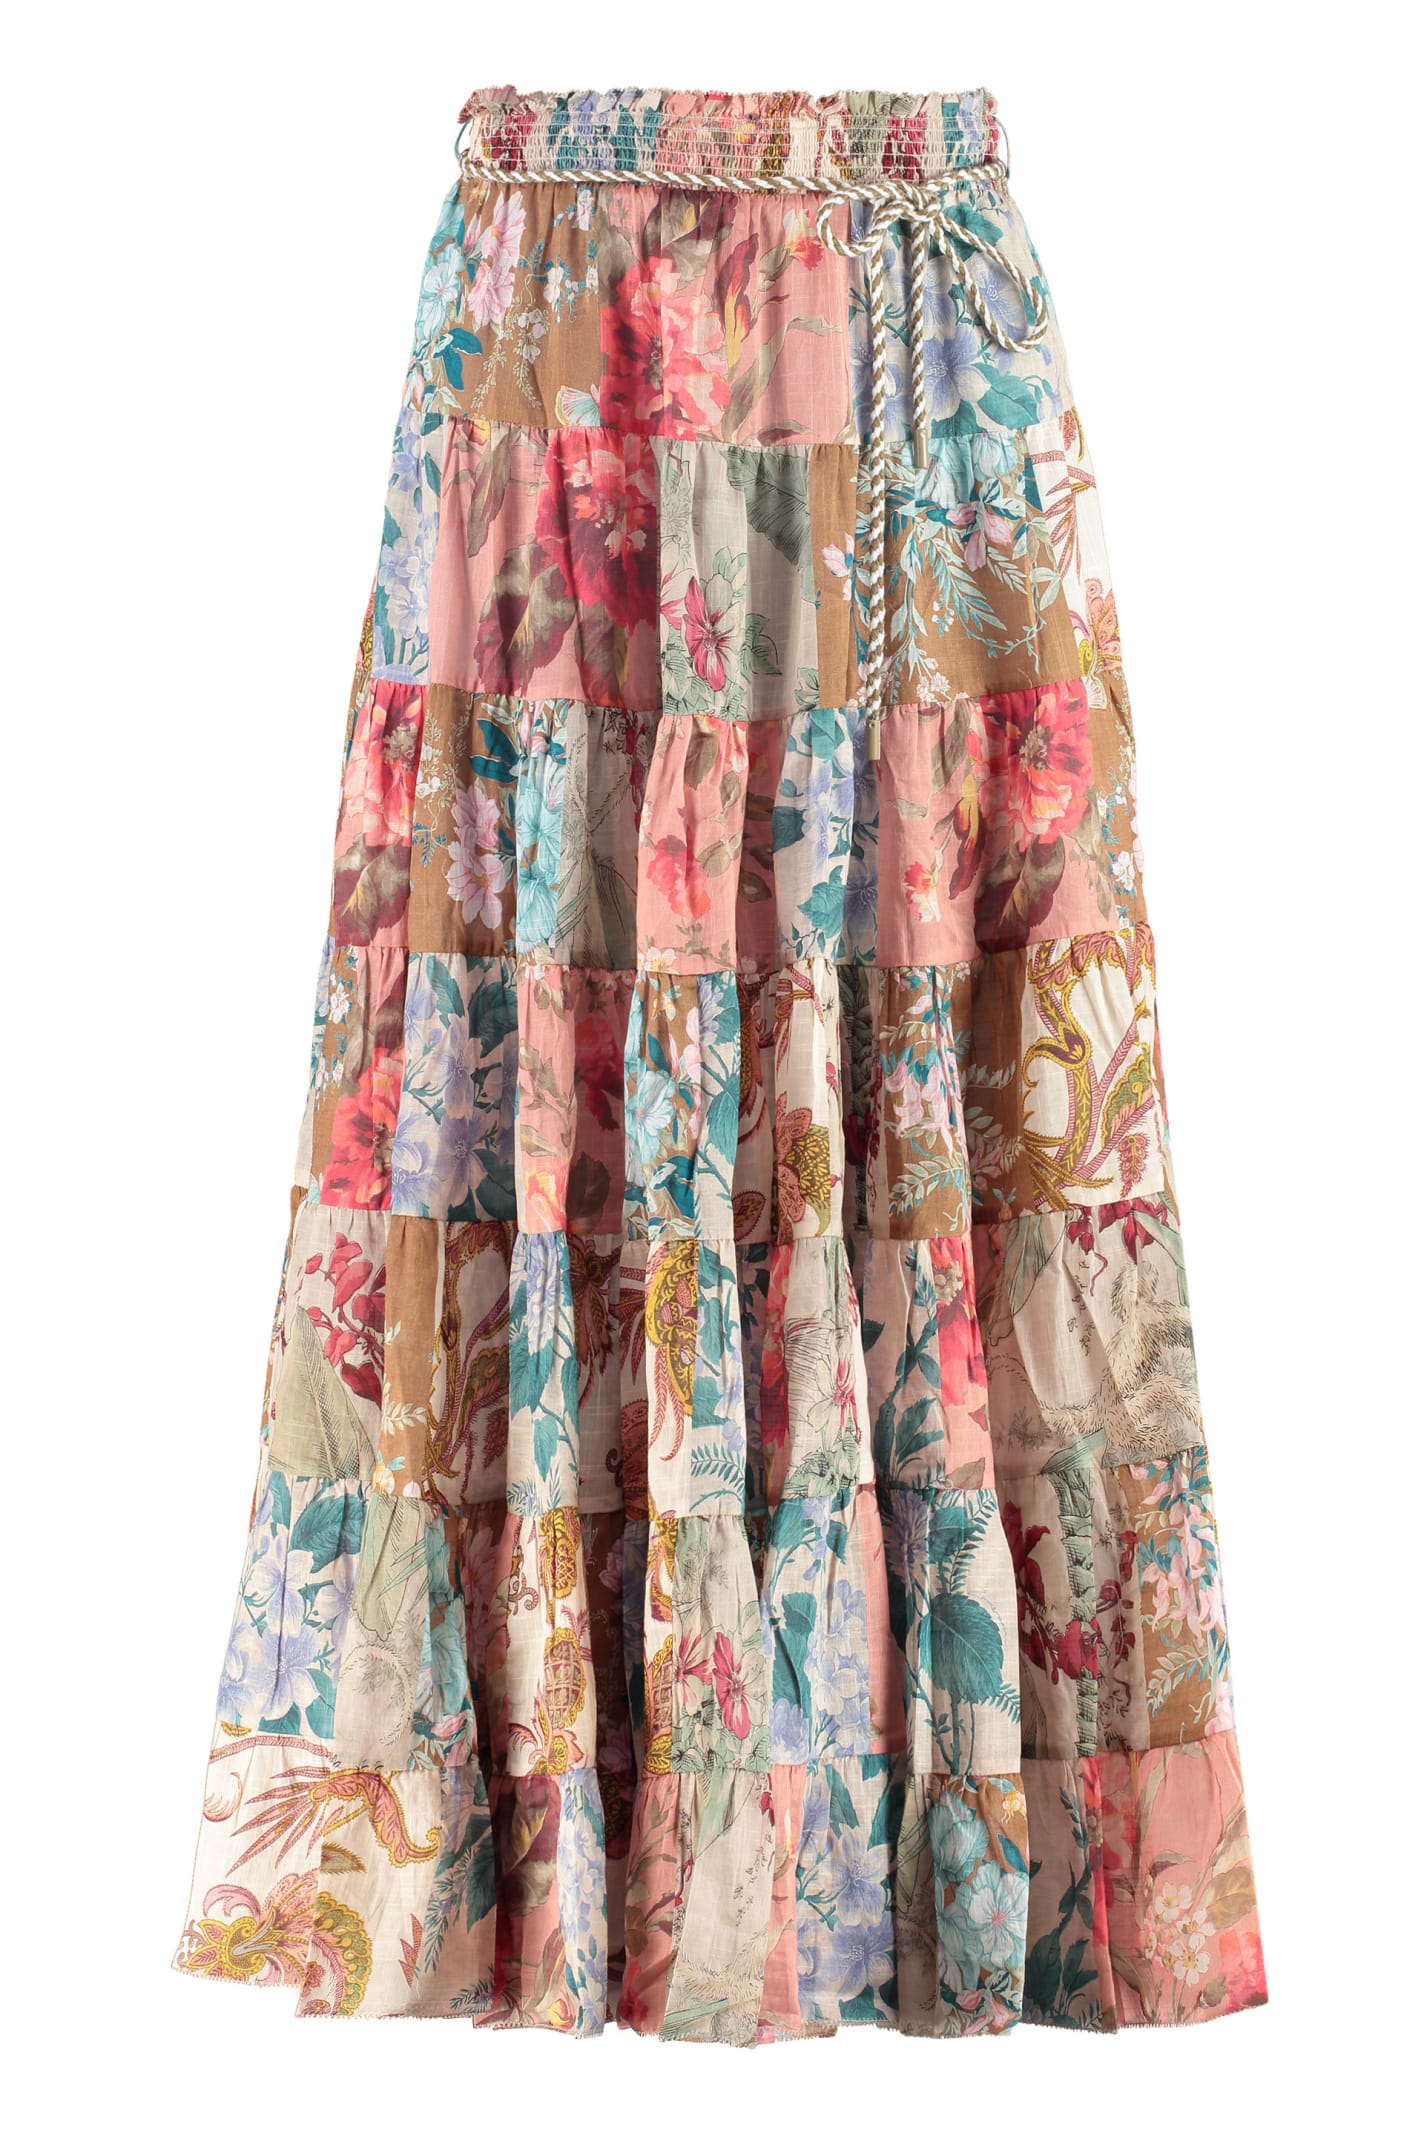 Zimmermann Cotton Ruffled Skirt